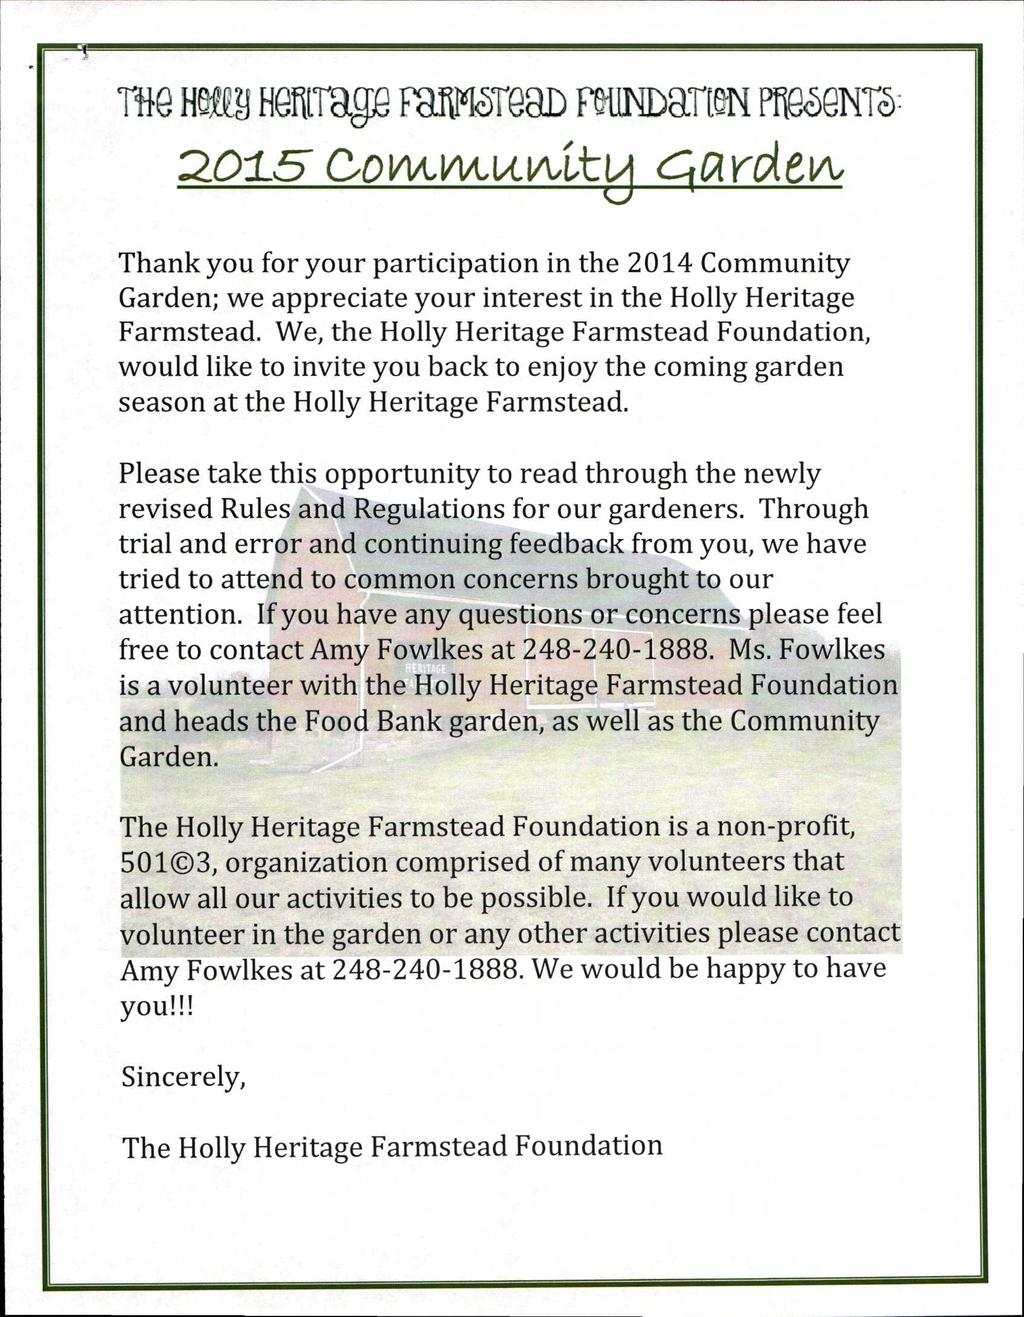 Ili@ fignicrap ParkmaD fnmaraux. 2015 GovikvikviAat.i C( Ciro(etA, Thank you for your participation in the 2014 Community Garden; we appreciate your interest in the Holly Heritage Farmstead.